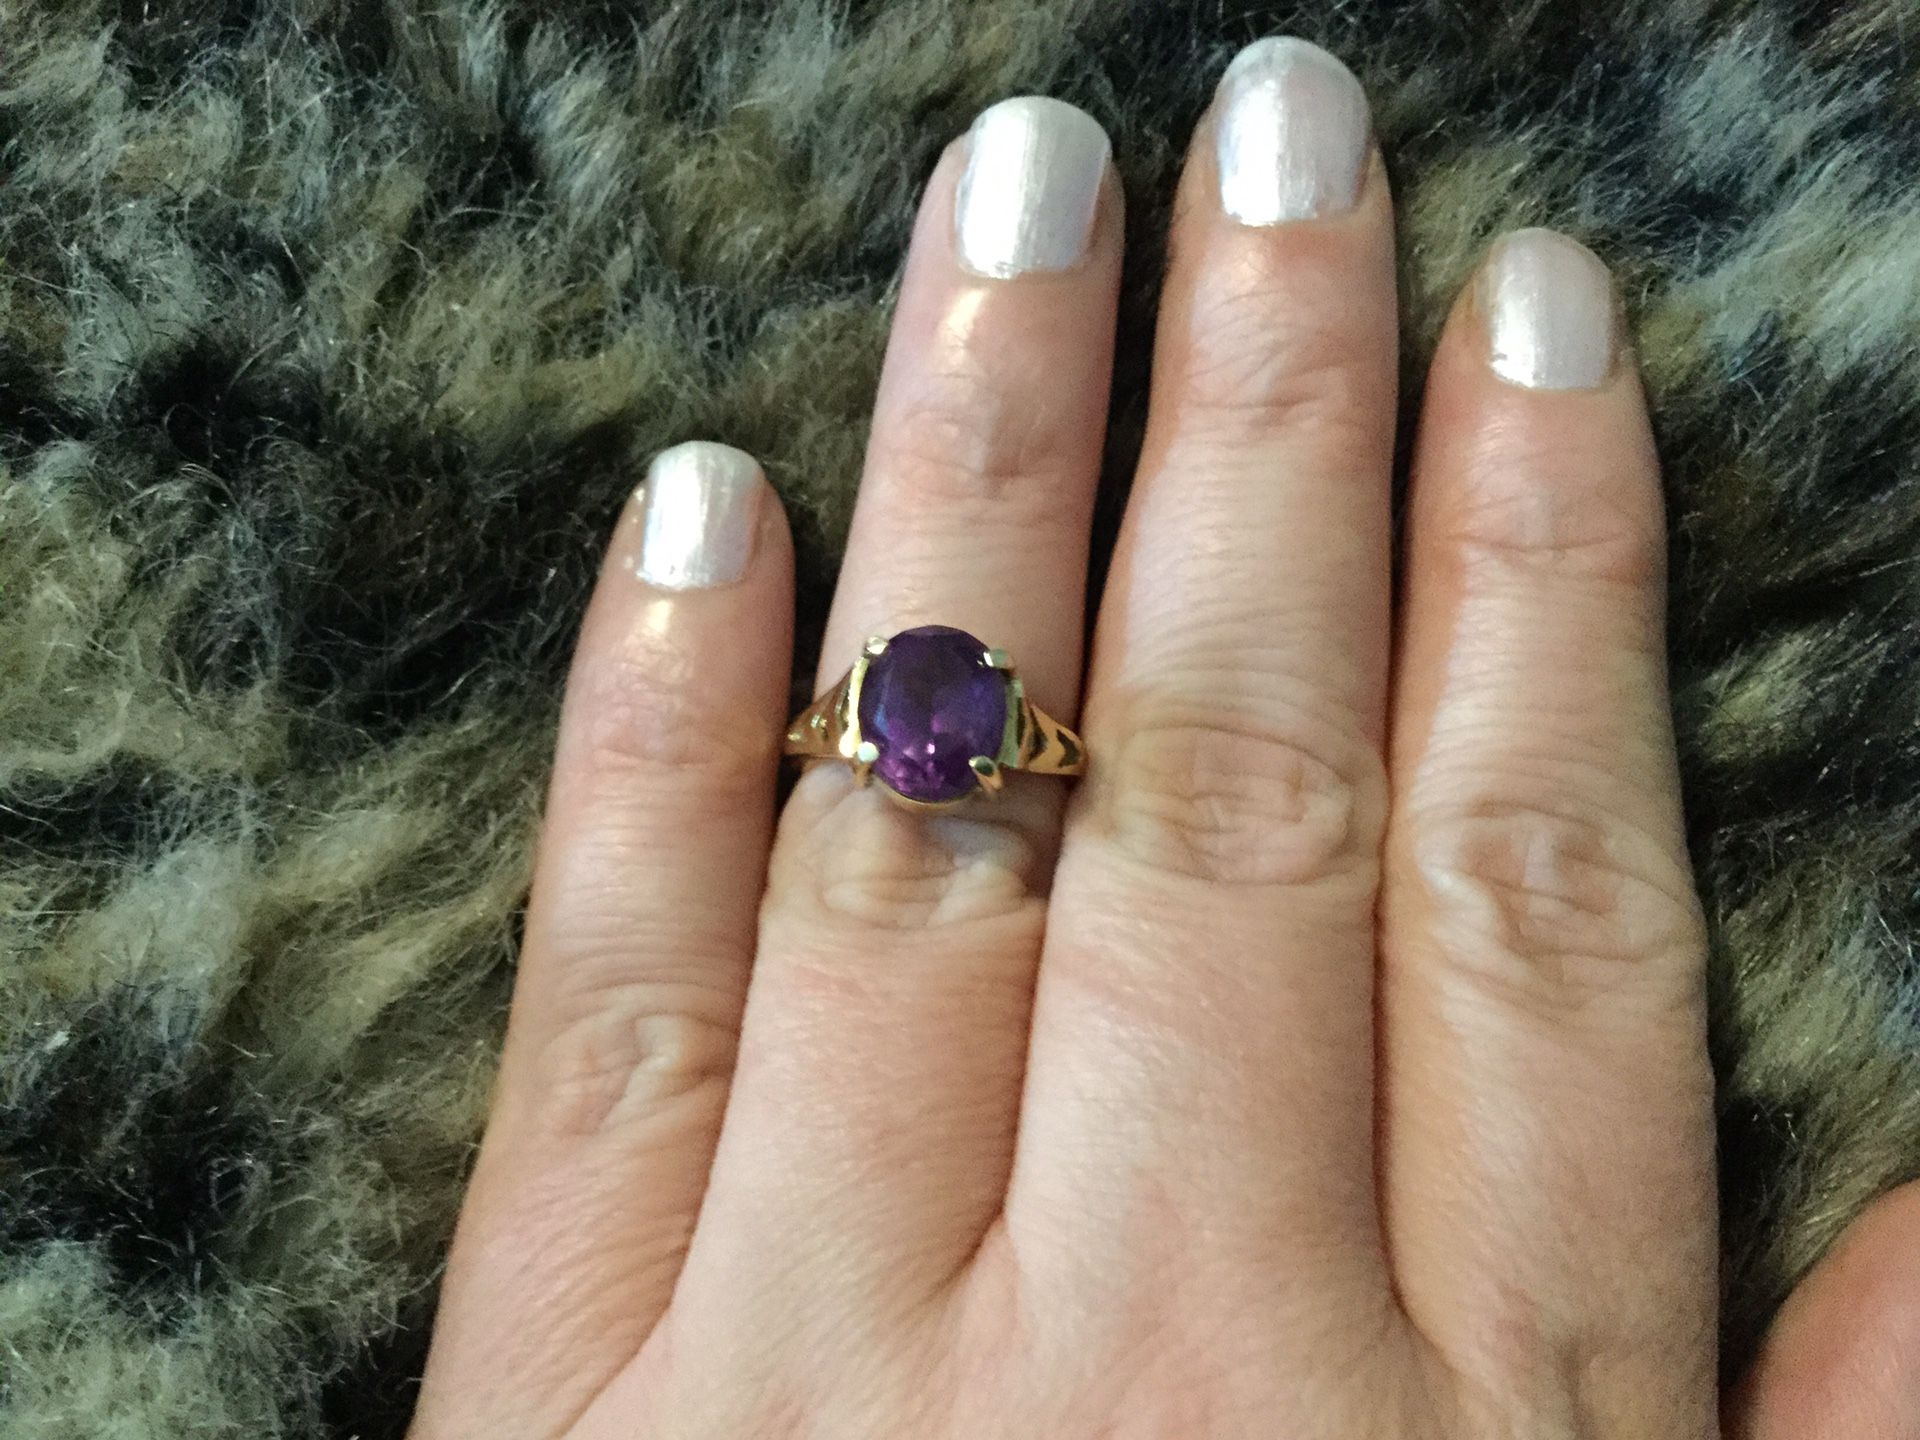 Gorgeous heavy 14k amethyst ring